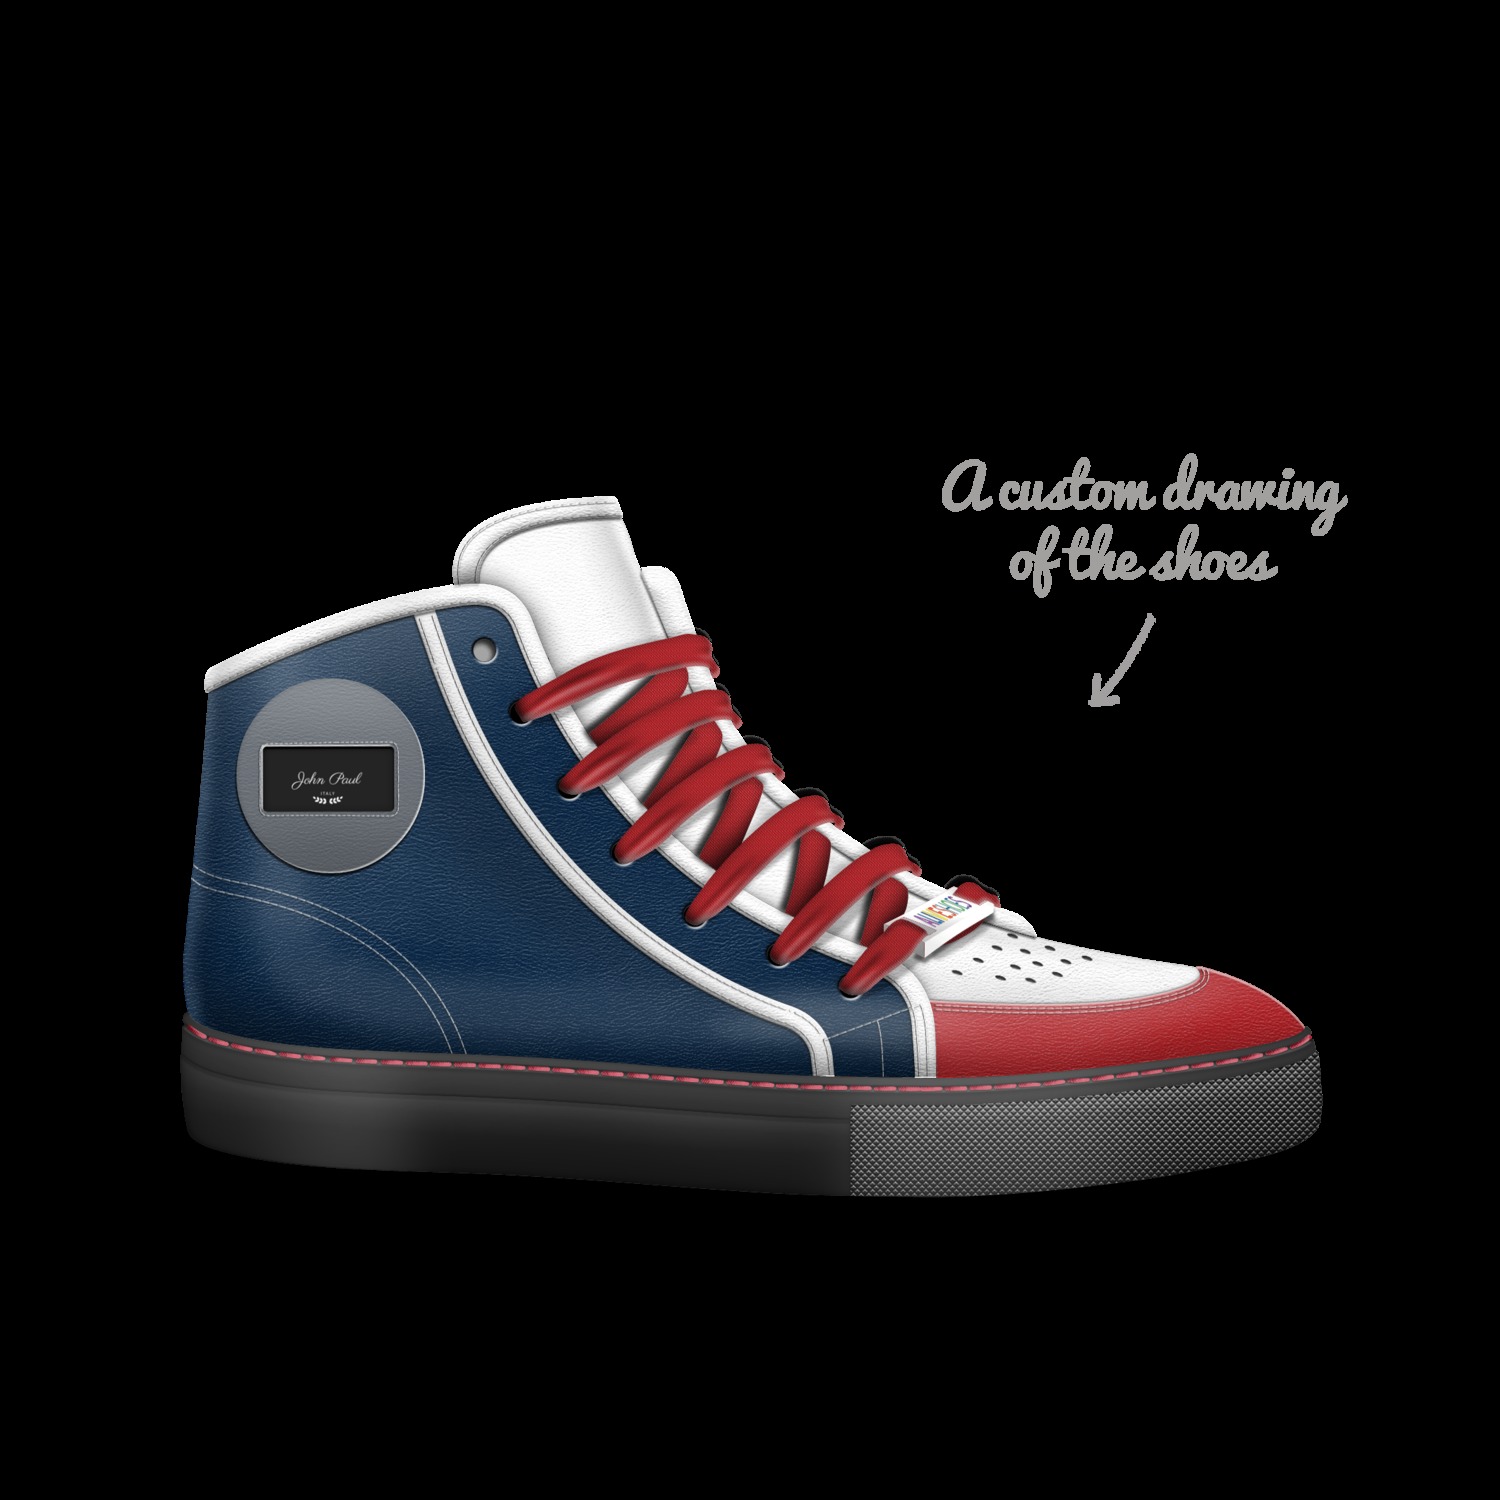 John Paul | A Custom Shoe concept by 